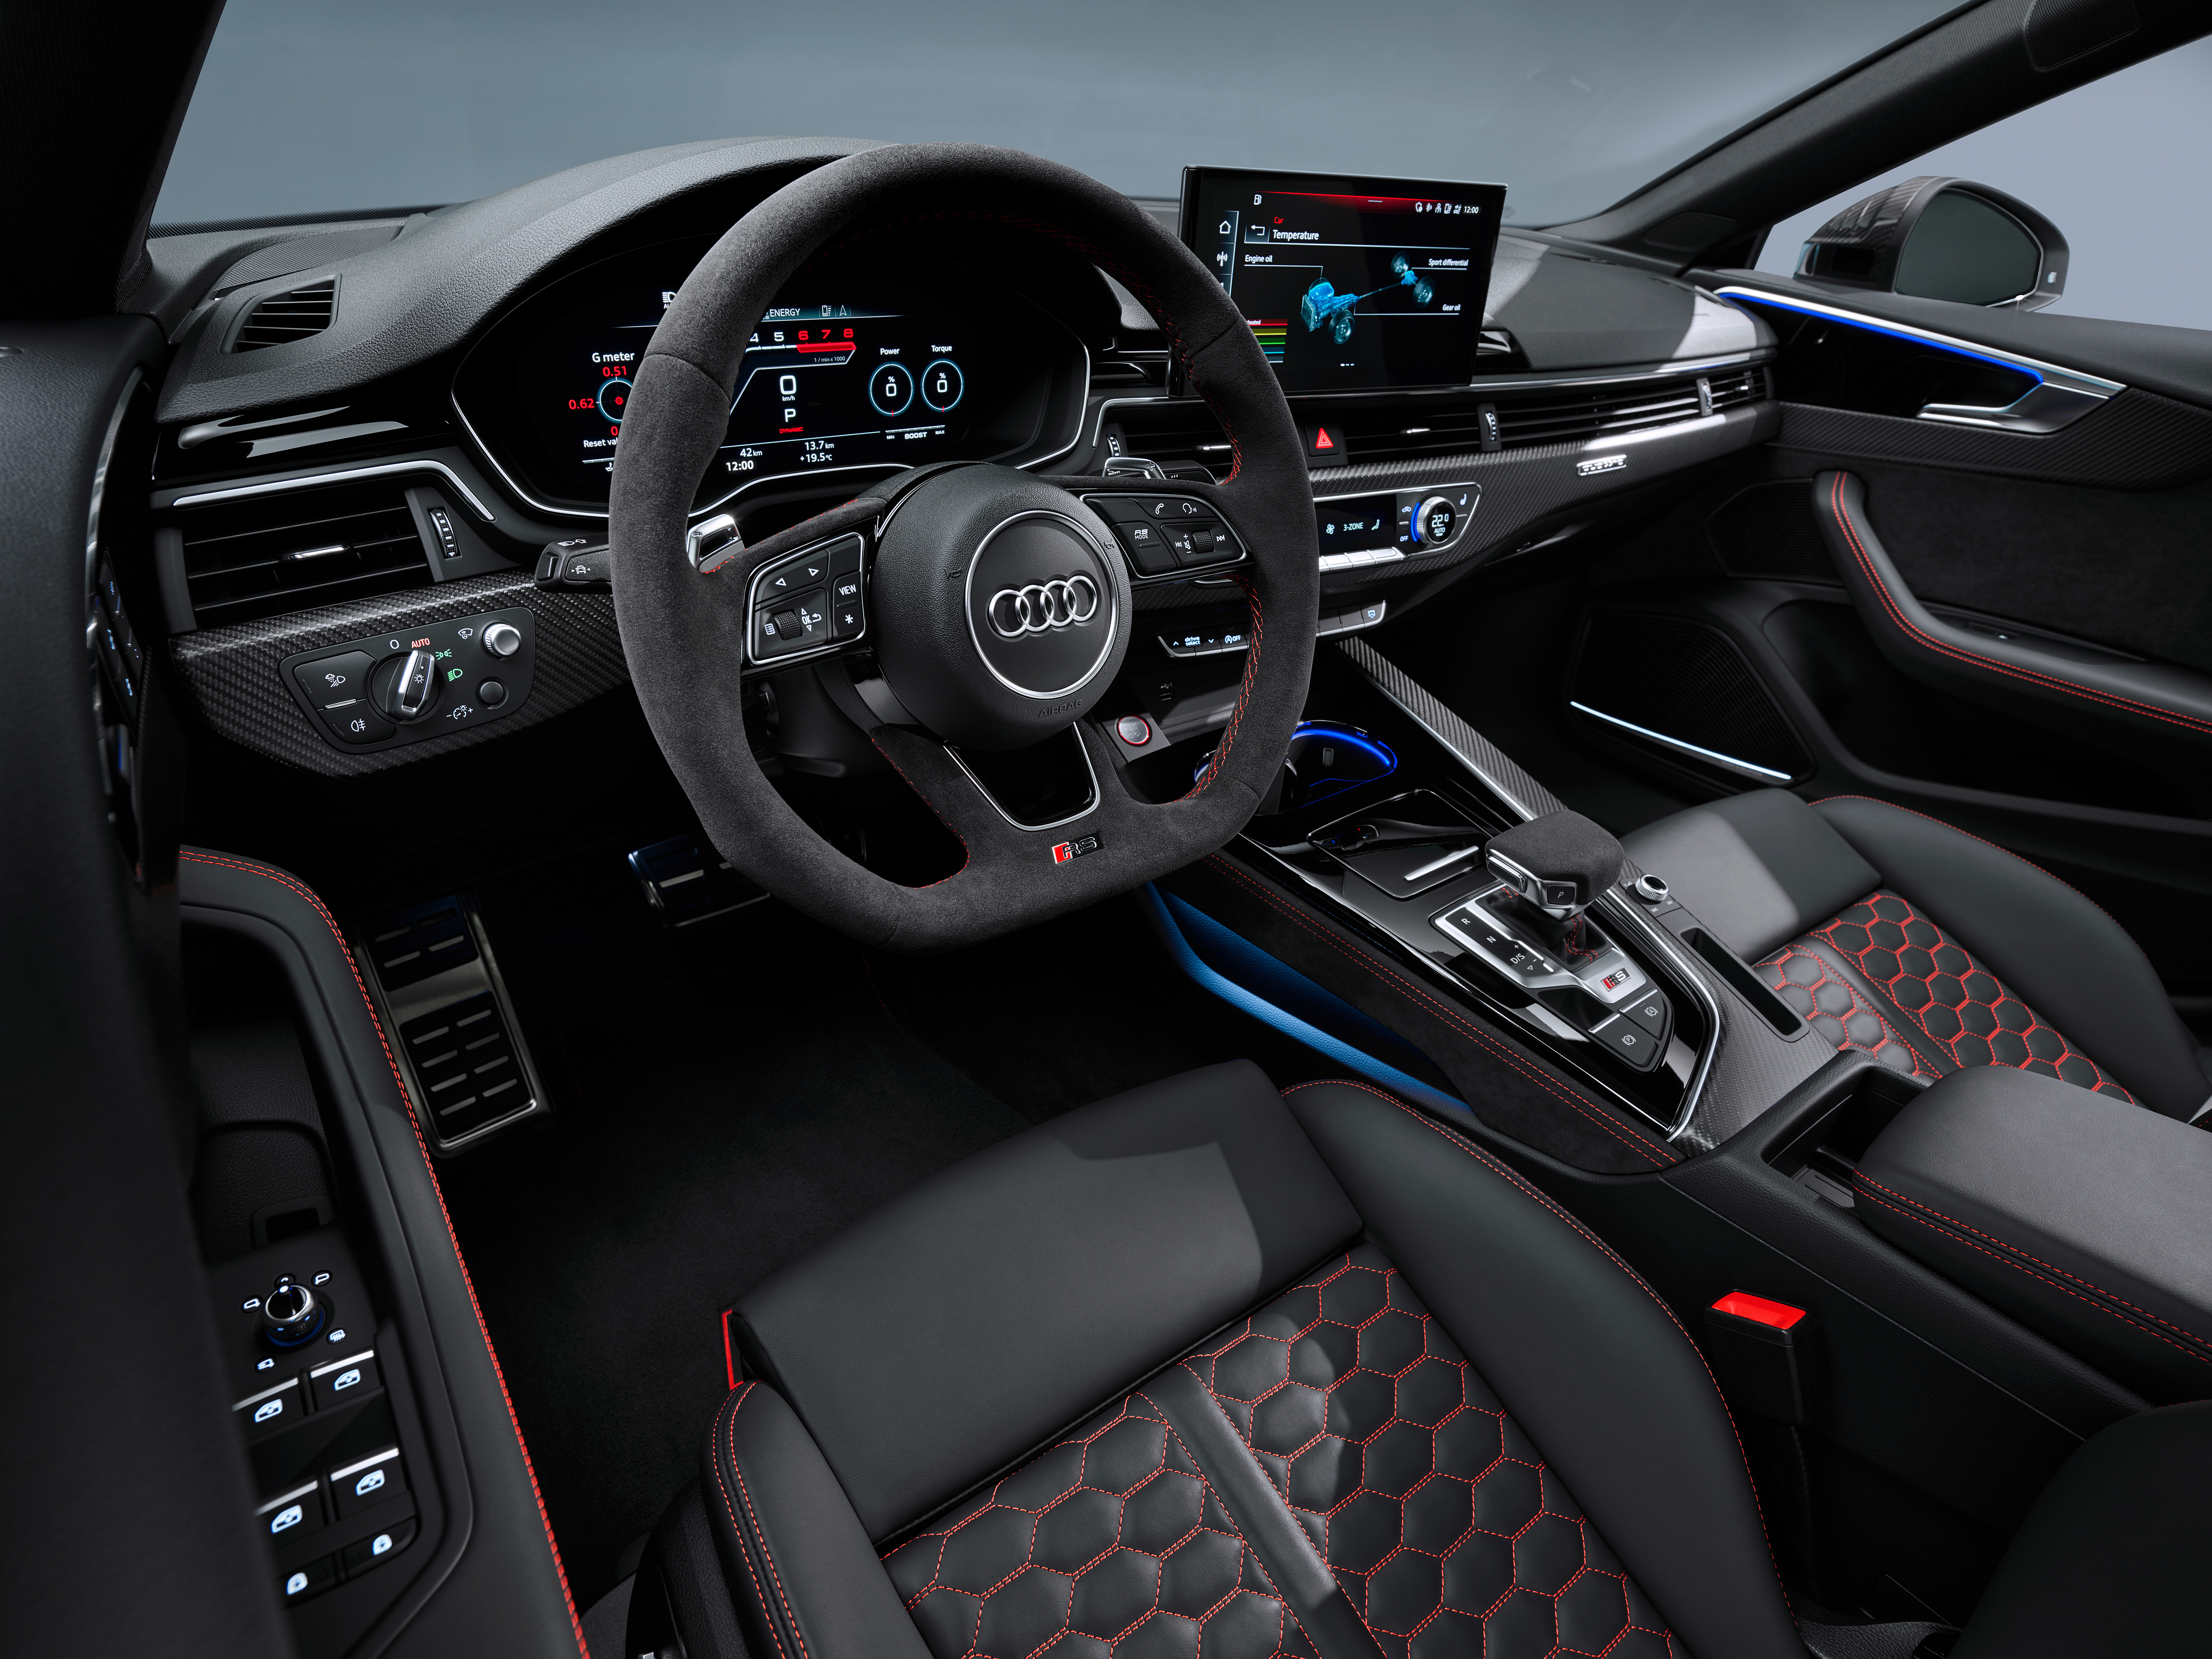 General 4961x3721 Audi car Audi A5 car interior vehicle steering wheel